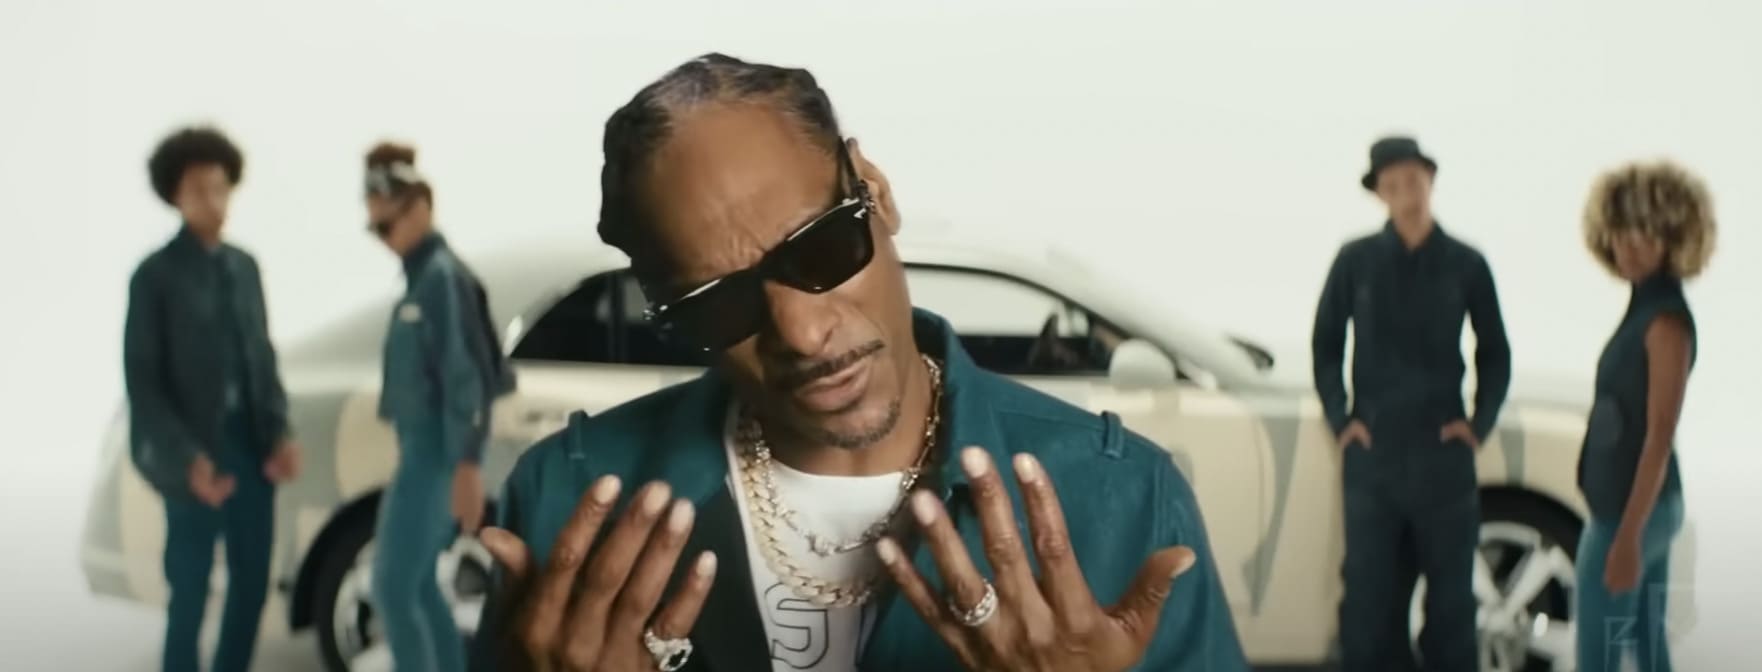 BACK IN THE GAME- Snoop Dogg, Eminem, Dr. Dre ft. DMX, Eve, Jadakiss, Ice  Cube, Method Man, The Lox🎶 